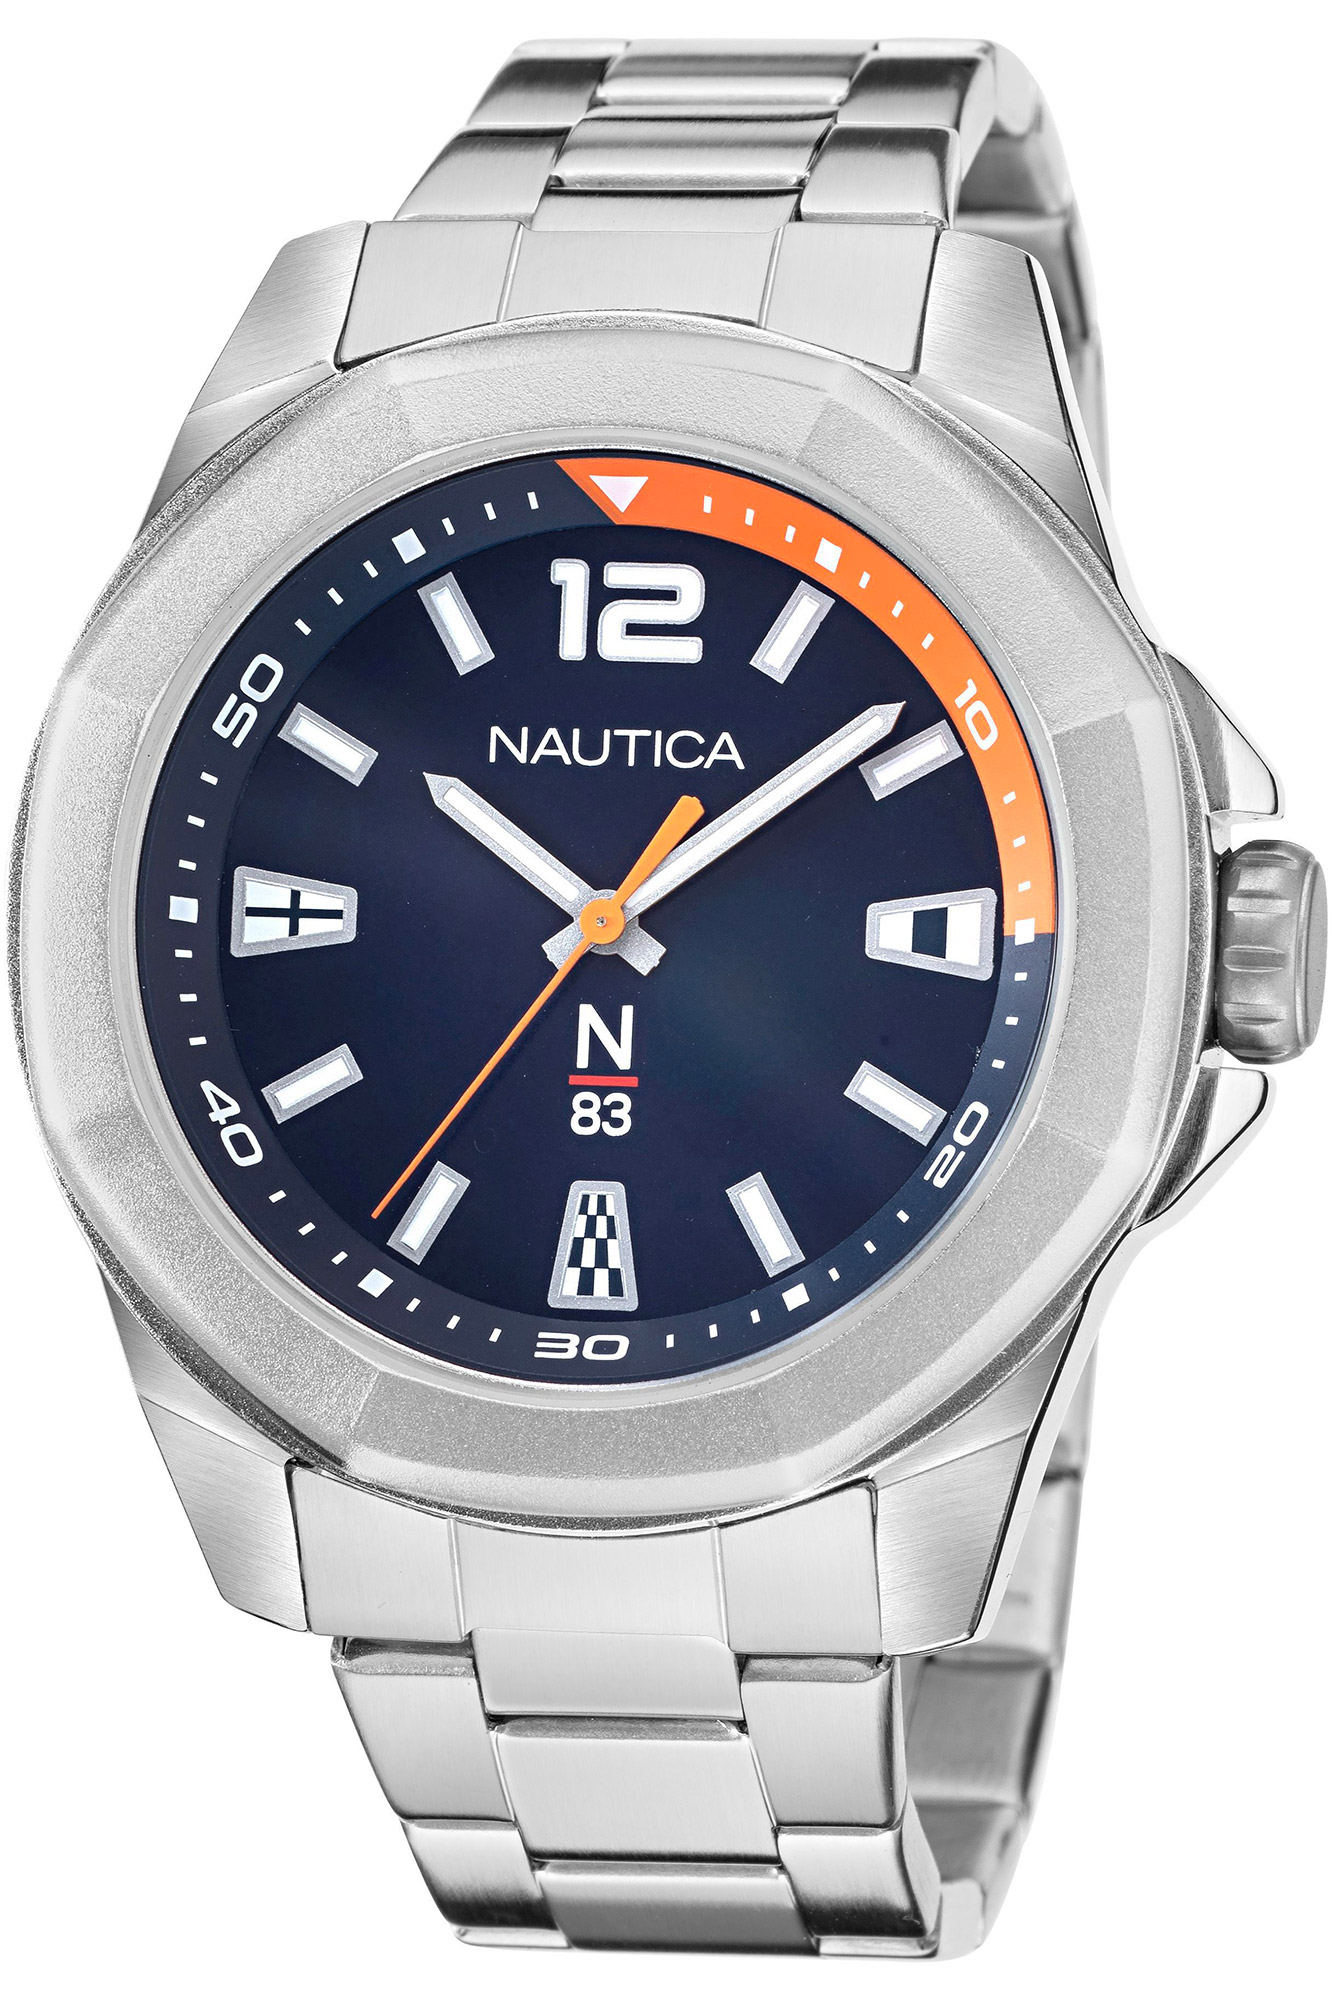 Uhr Nautica naptbf103